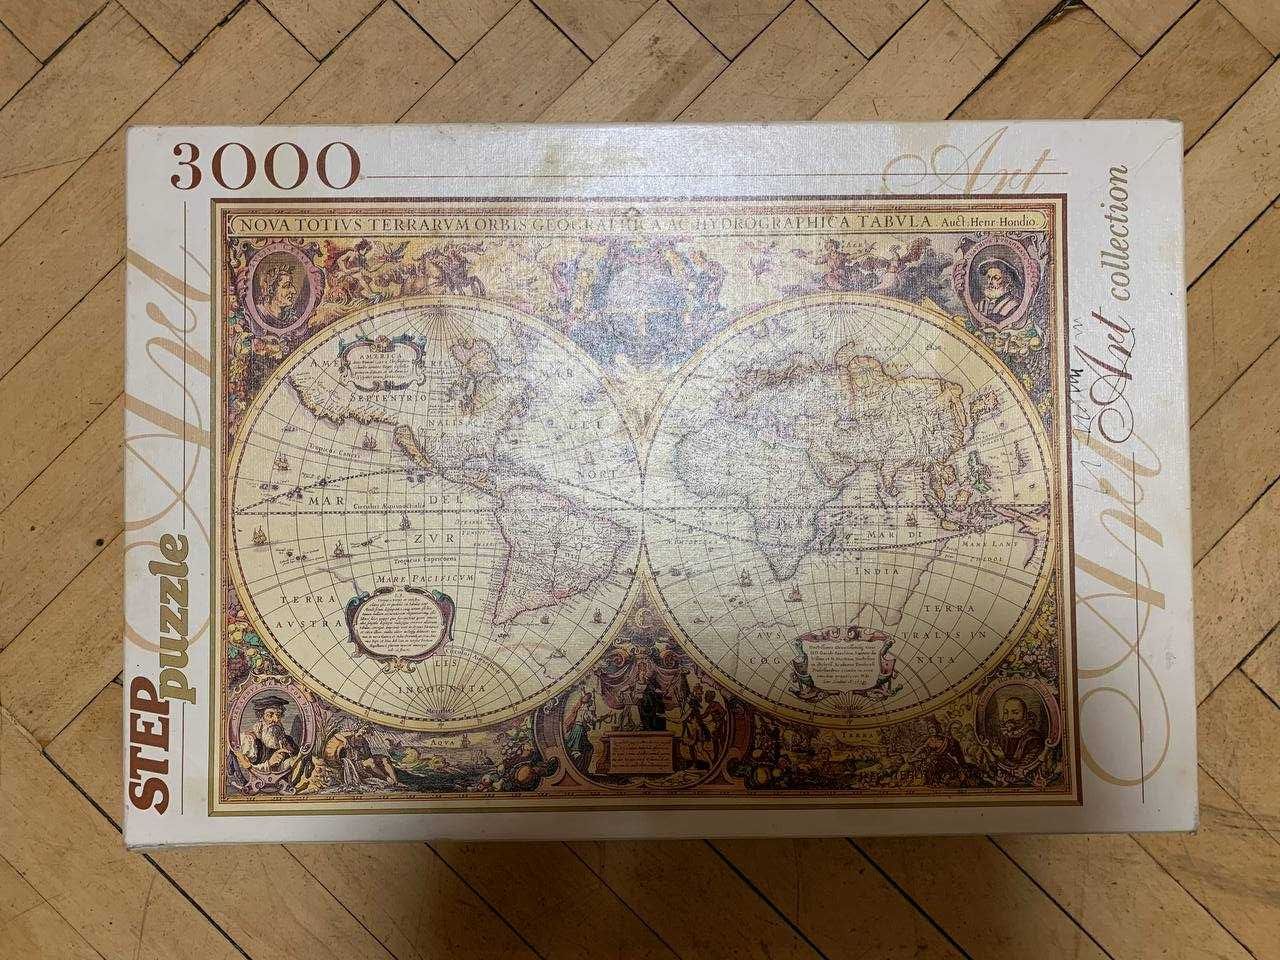 STEP-puzzle Стародавня карта світу - 3000 пазлів.